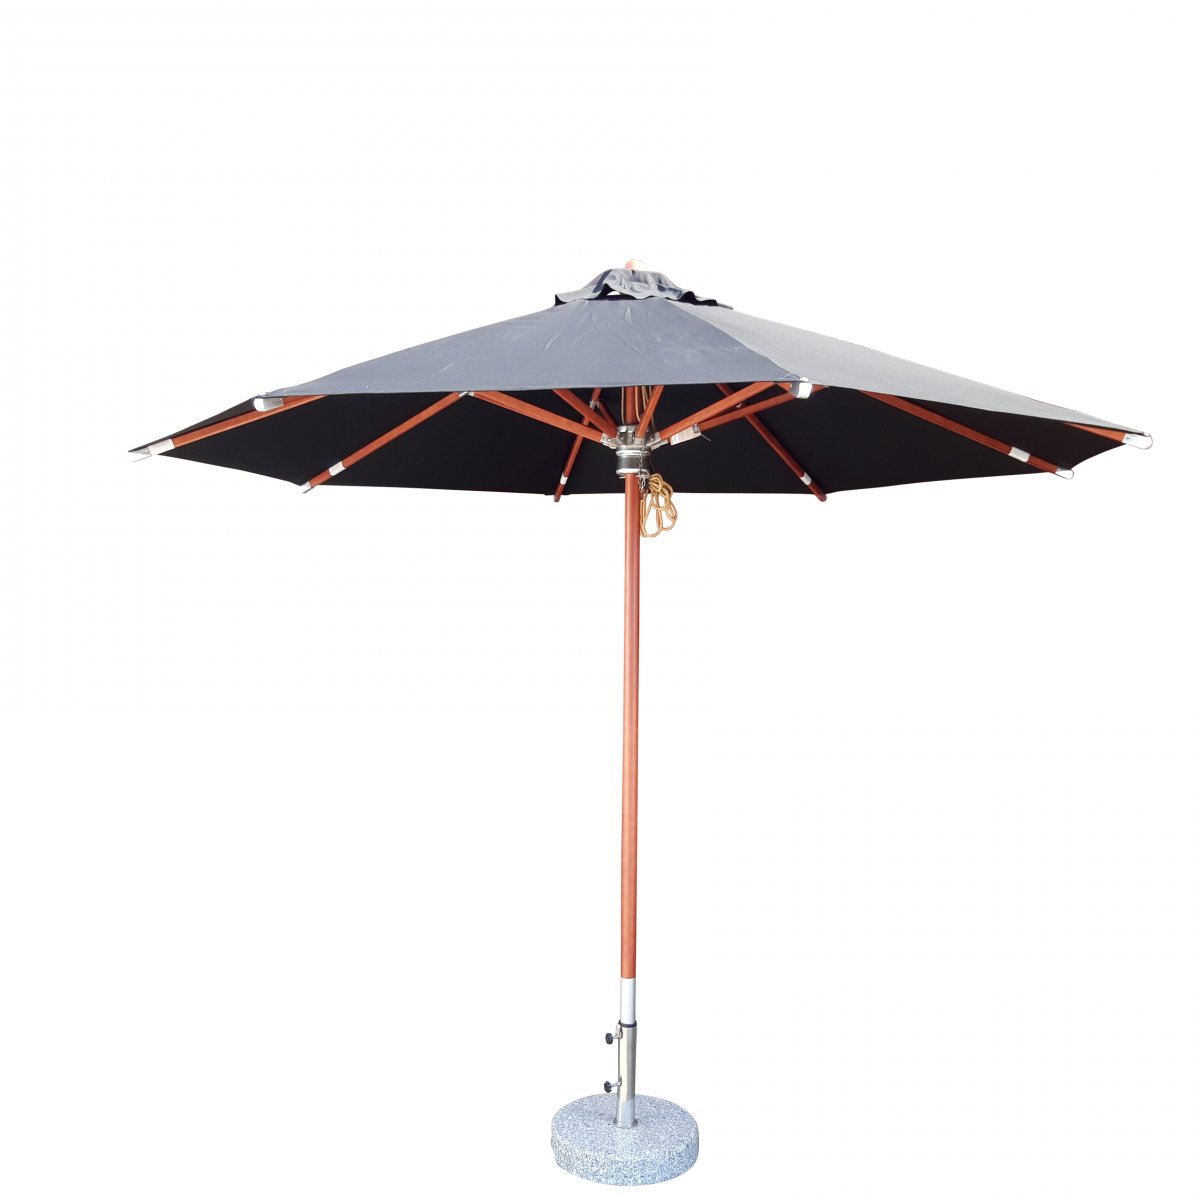 "Sunbrella" træstoks - Ø: 3m - Vandtæt + Dug har UV50+ solbeskyttelse. Model: Toulouse - Træstok med dug - Havemøbelhuset